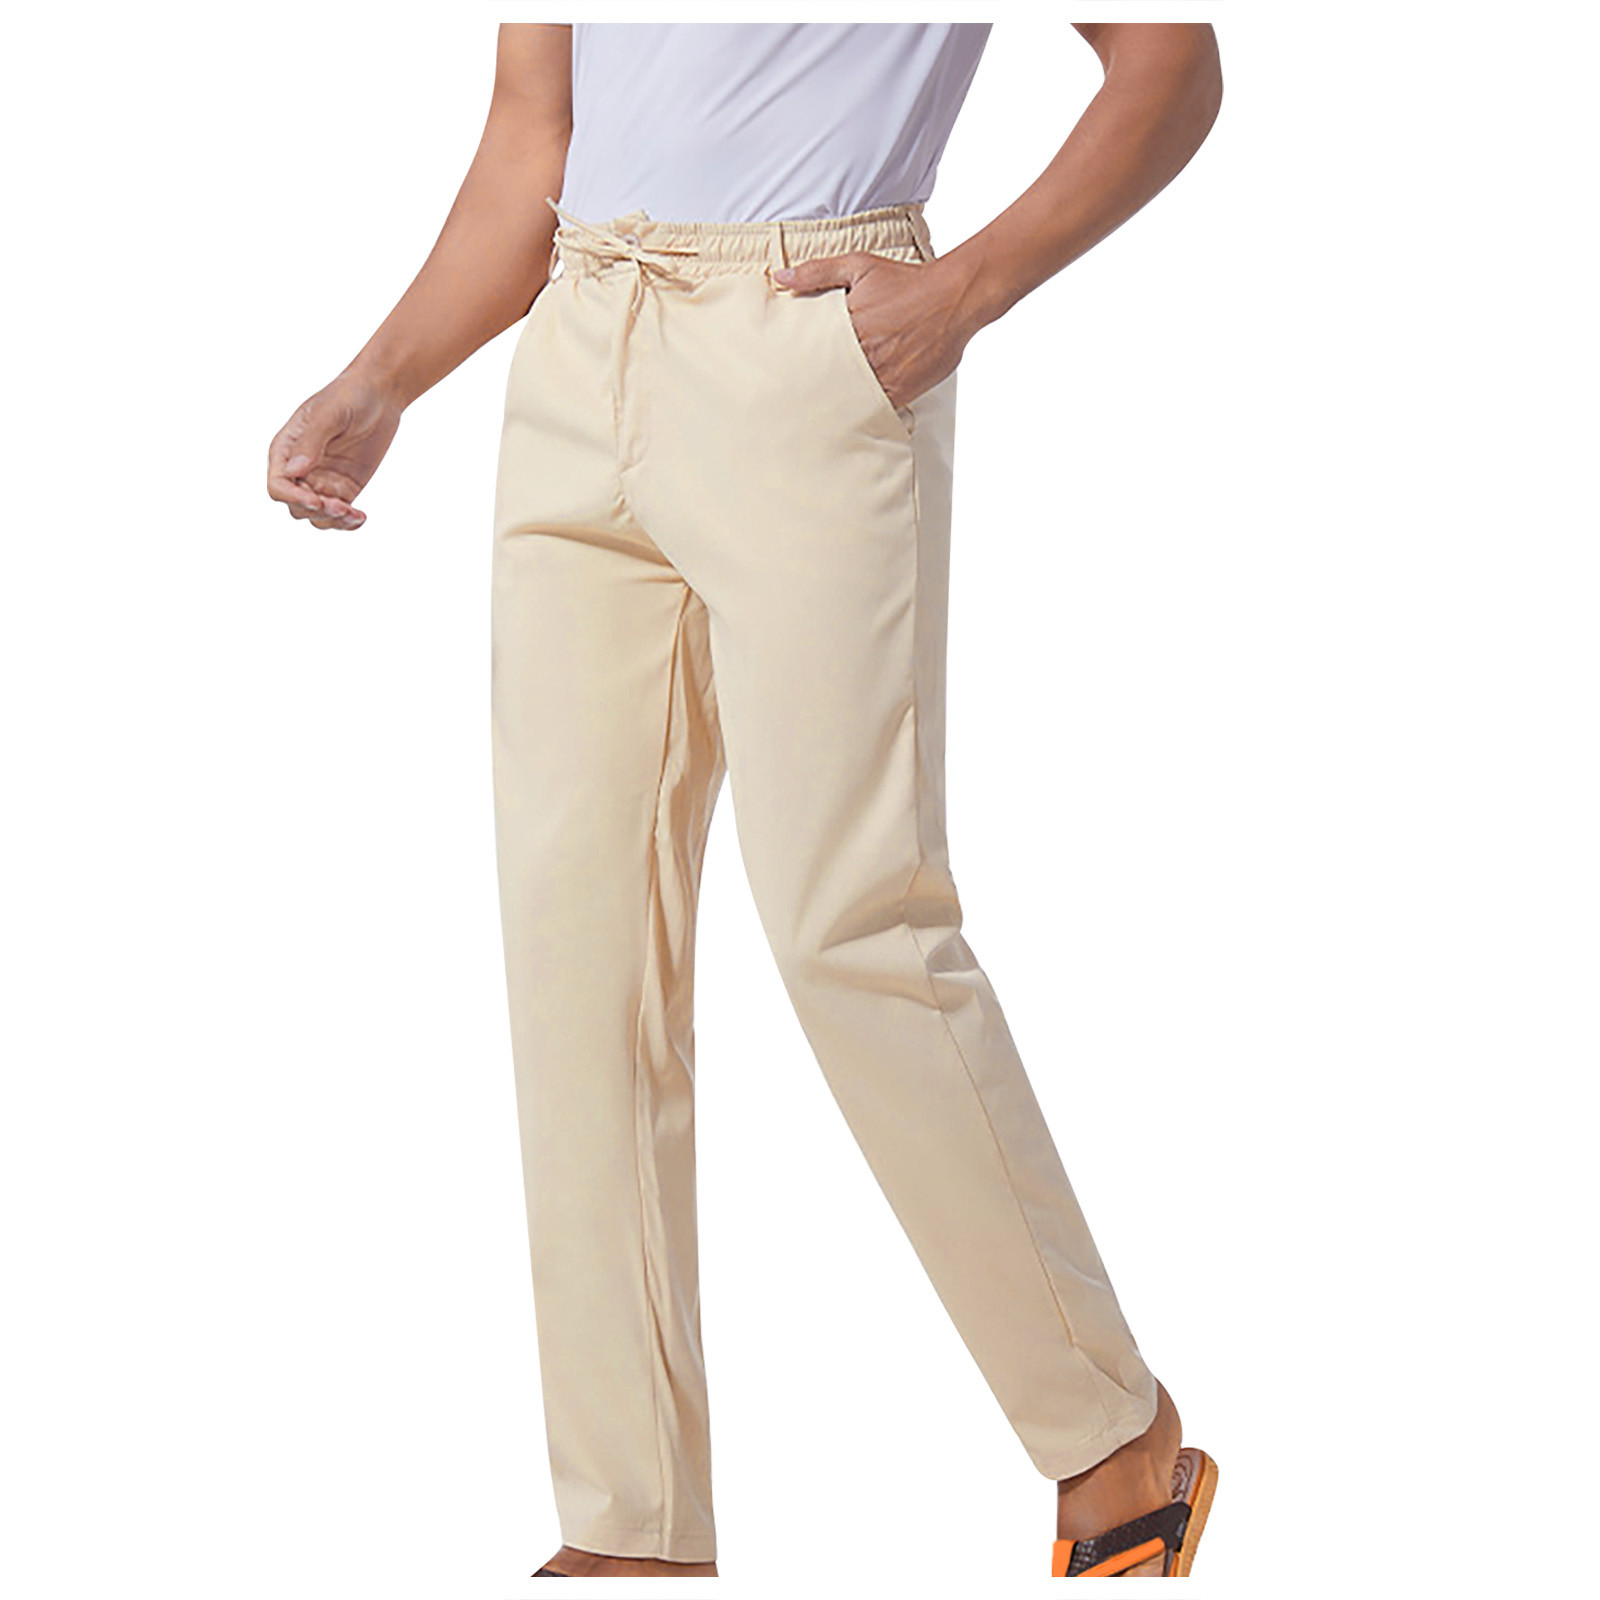 Tdoqot Chinos Pants Men- Cotton Drawstring Comftable Elastic Waist Slim Casual Mens Pants Beige - image 2 of 6